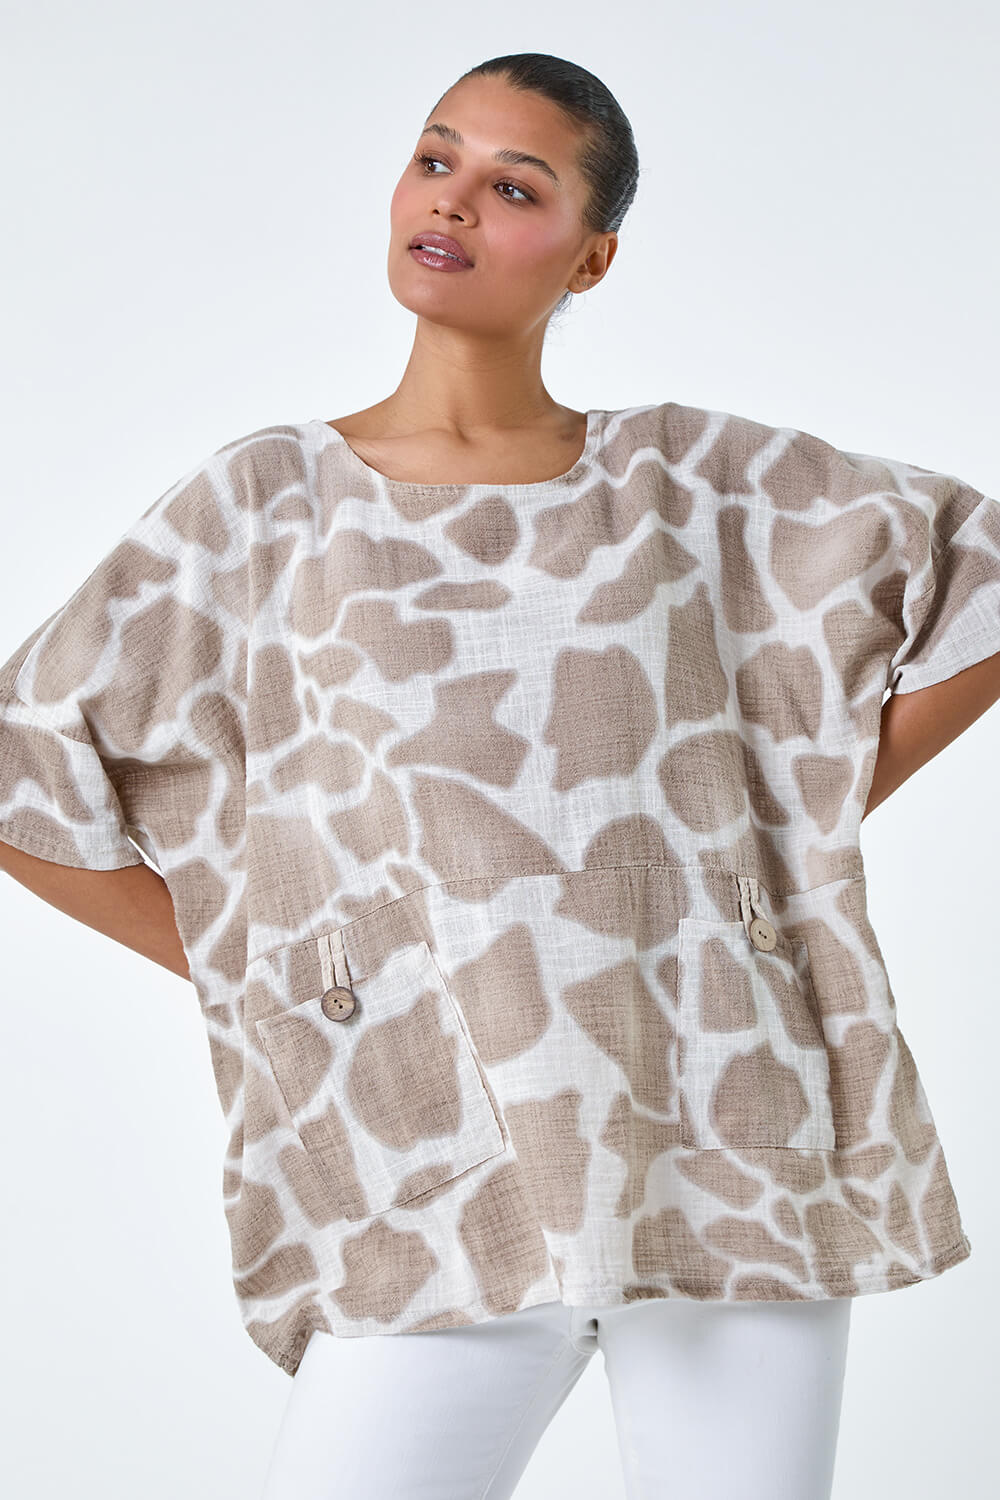 Taupe Animal Print Cotton Tunic Top, Image 4 of 5